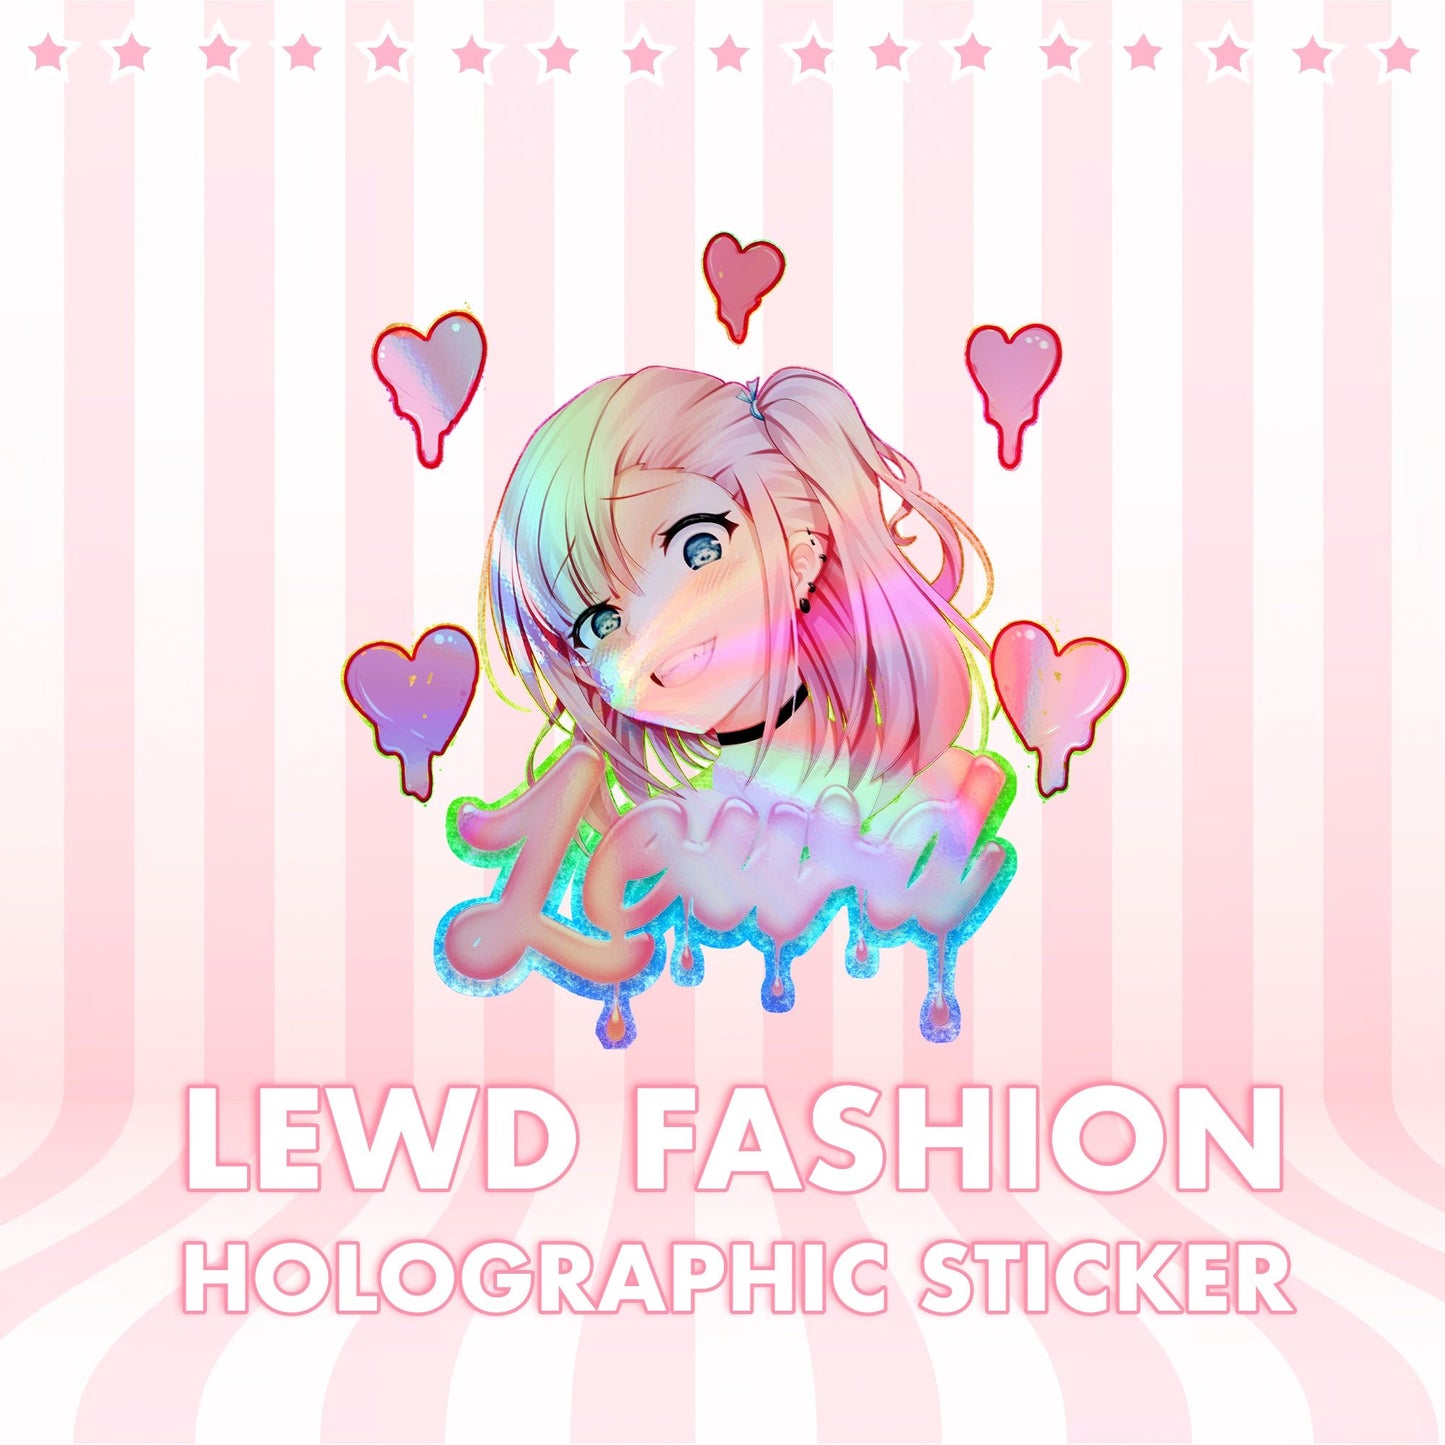 Lewd Fashion Holographic Sticker - Lewd Fashion